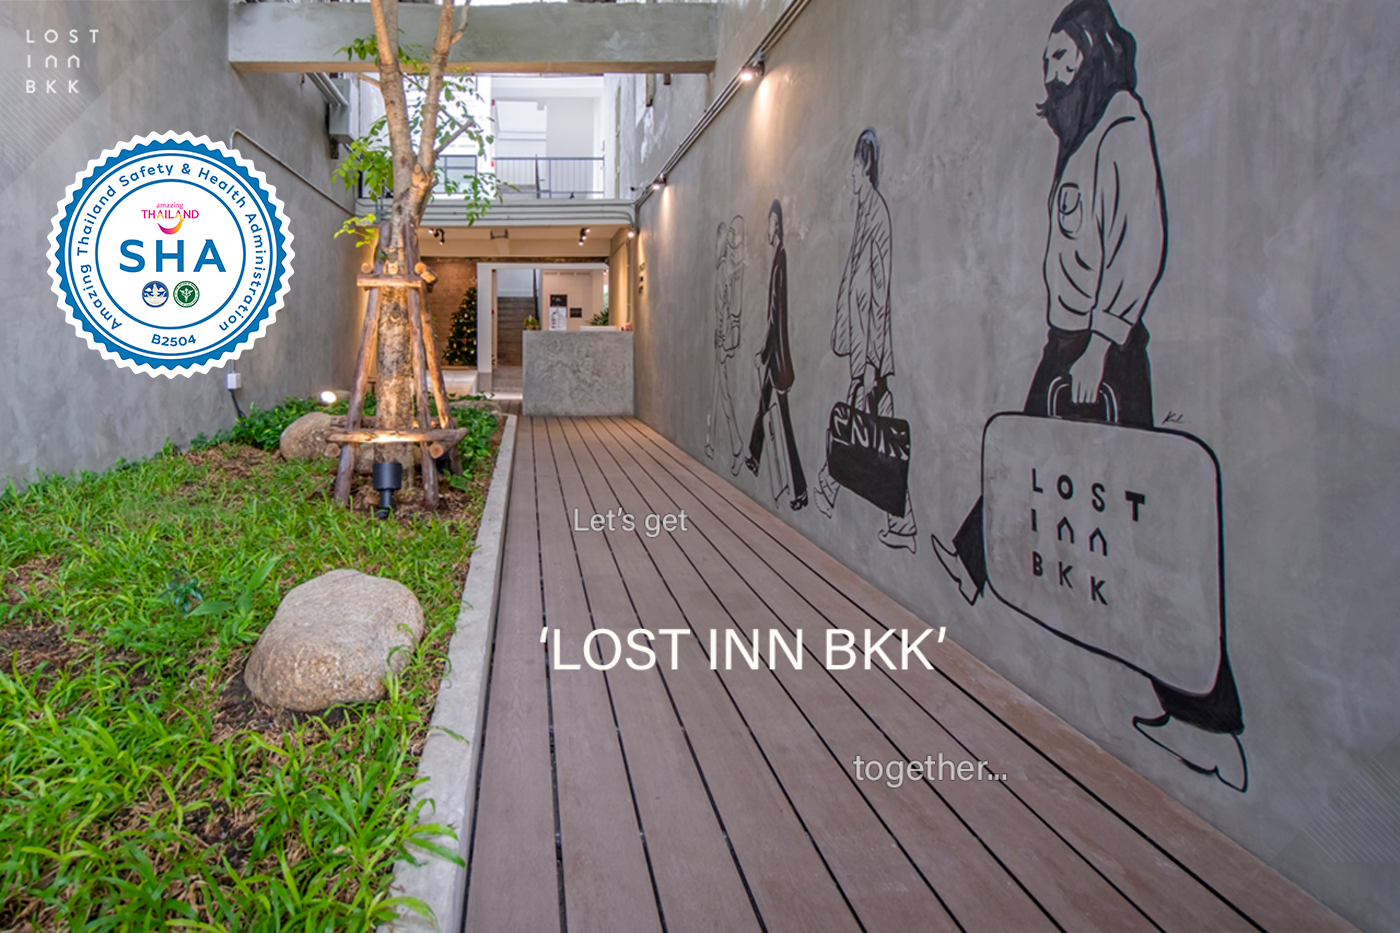 Lost inn bkk - Image 0